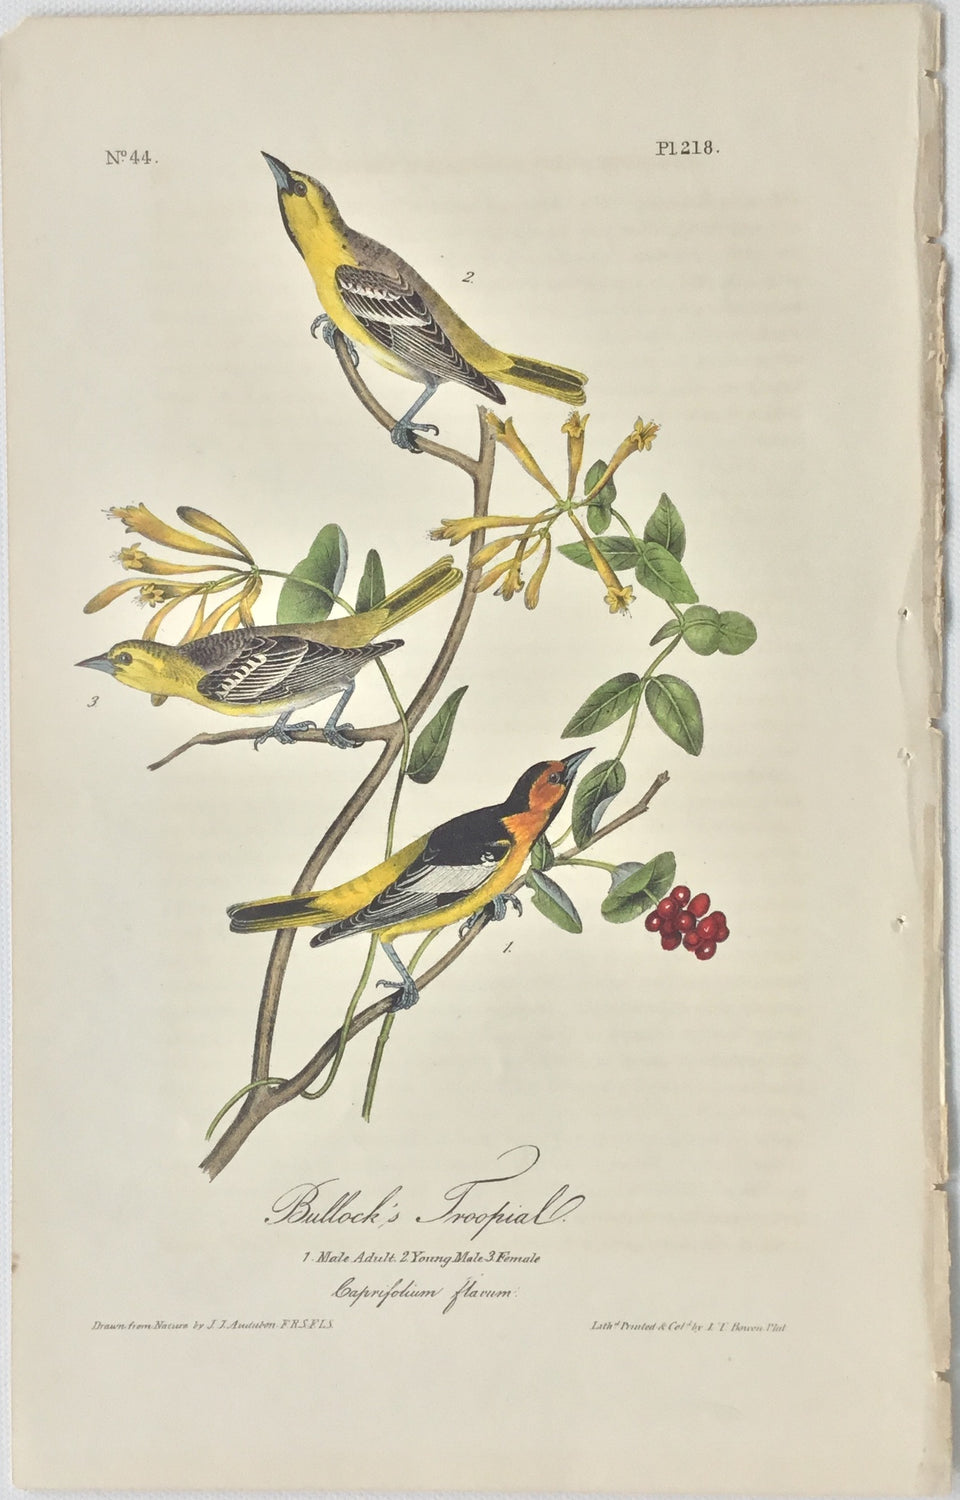 Original Audubon Octavo Bullick's Troupials, plate 218